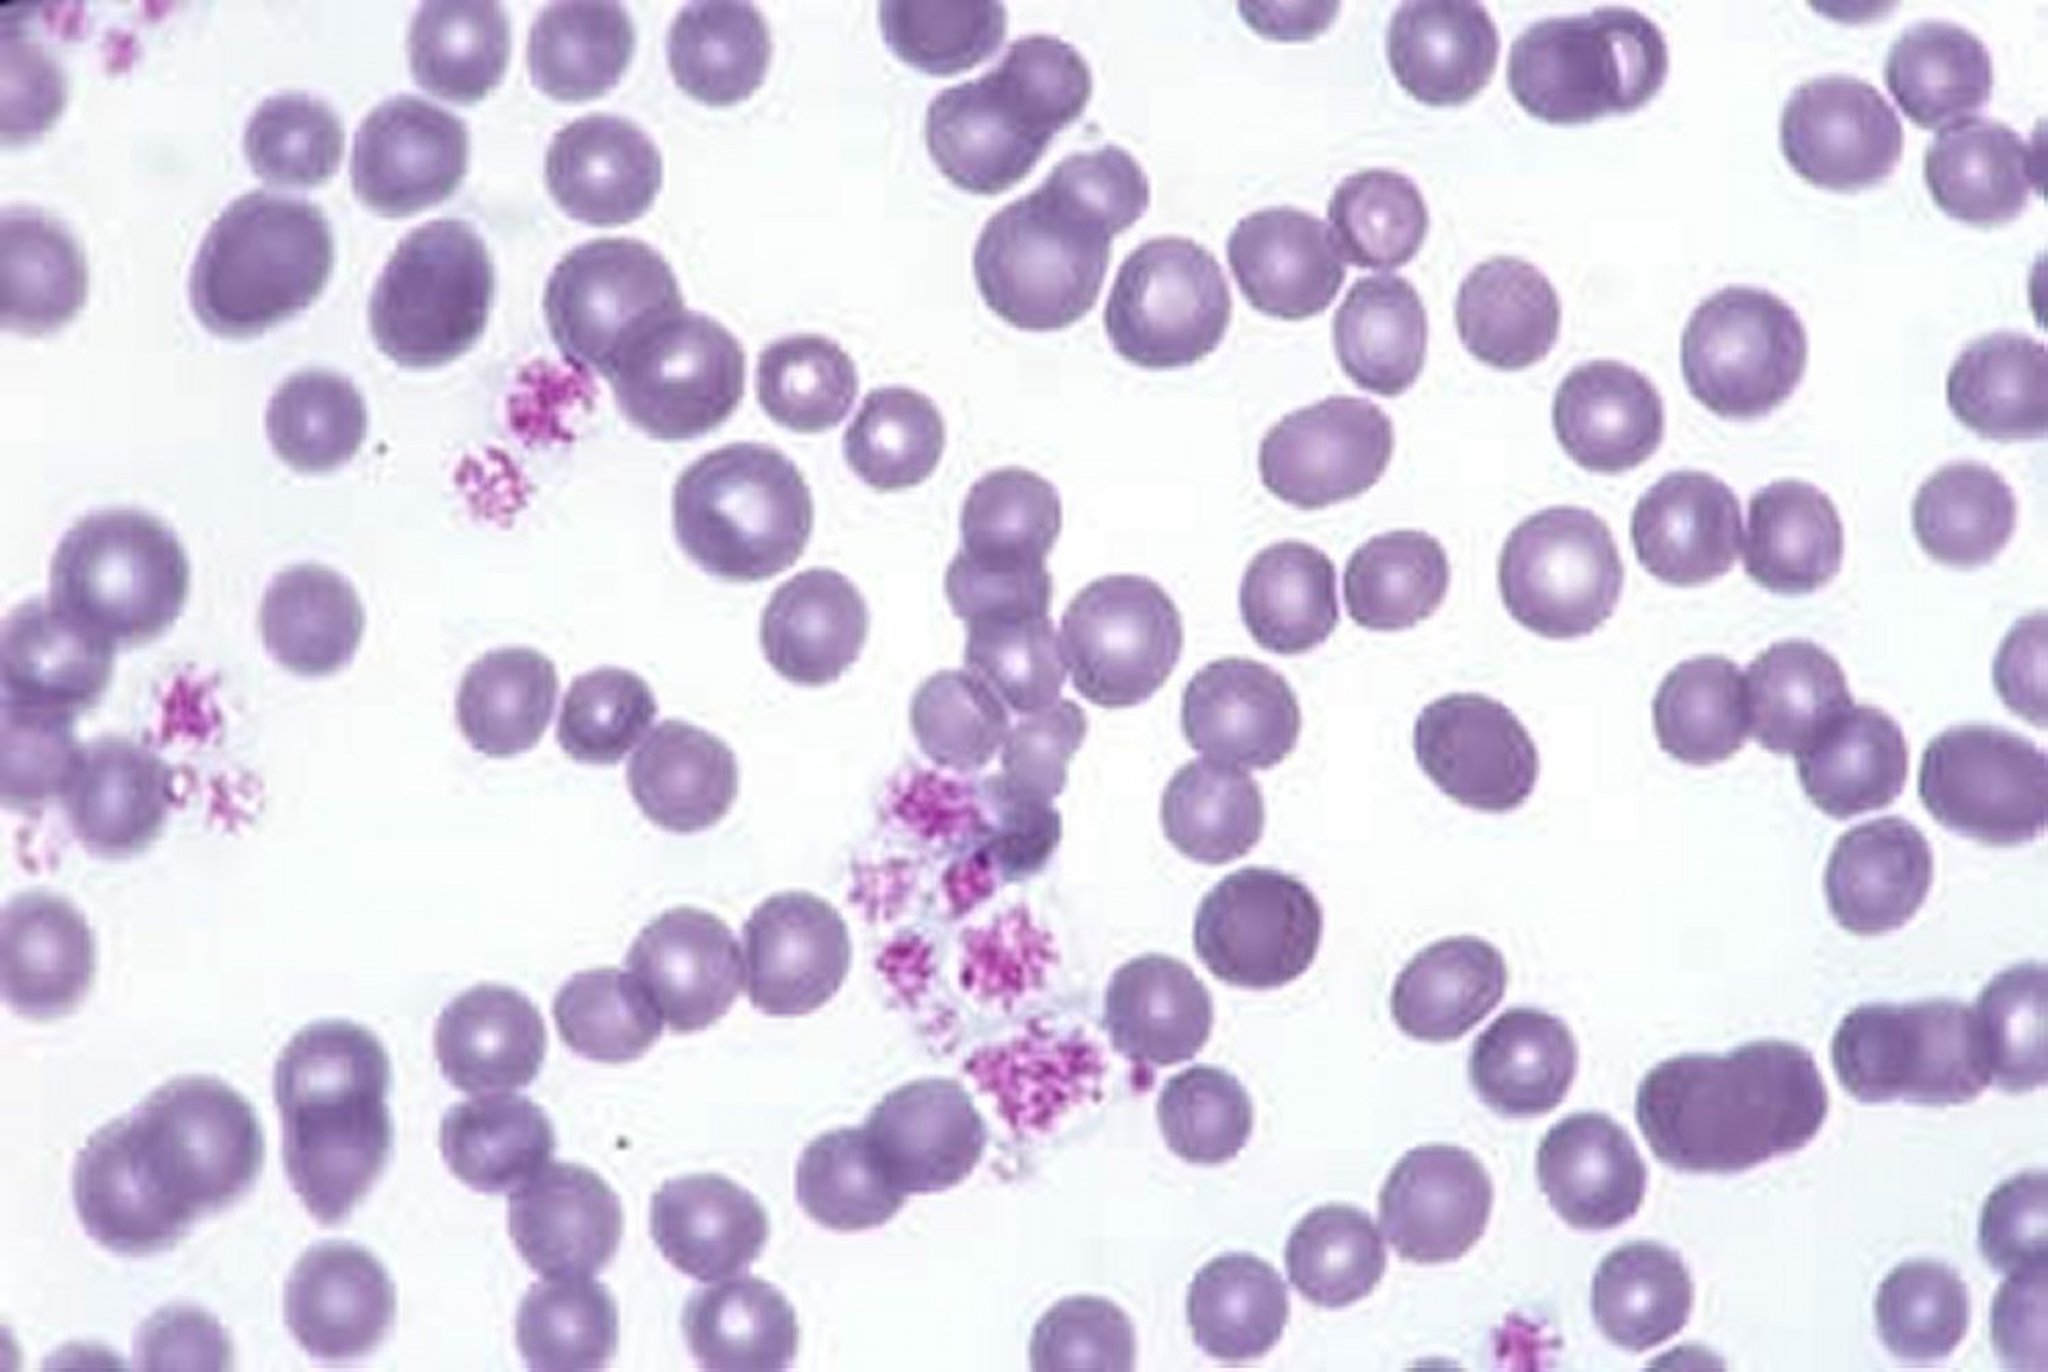 Nonregenerative anemia, blood smear, cat